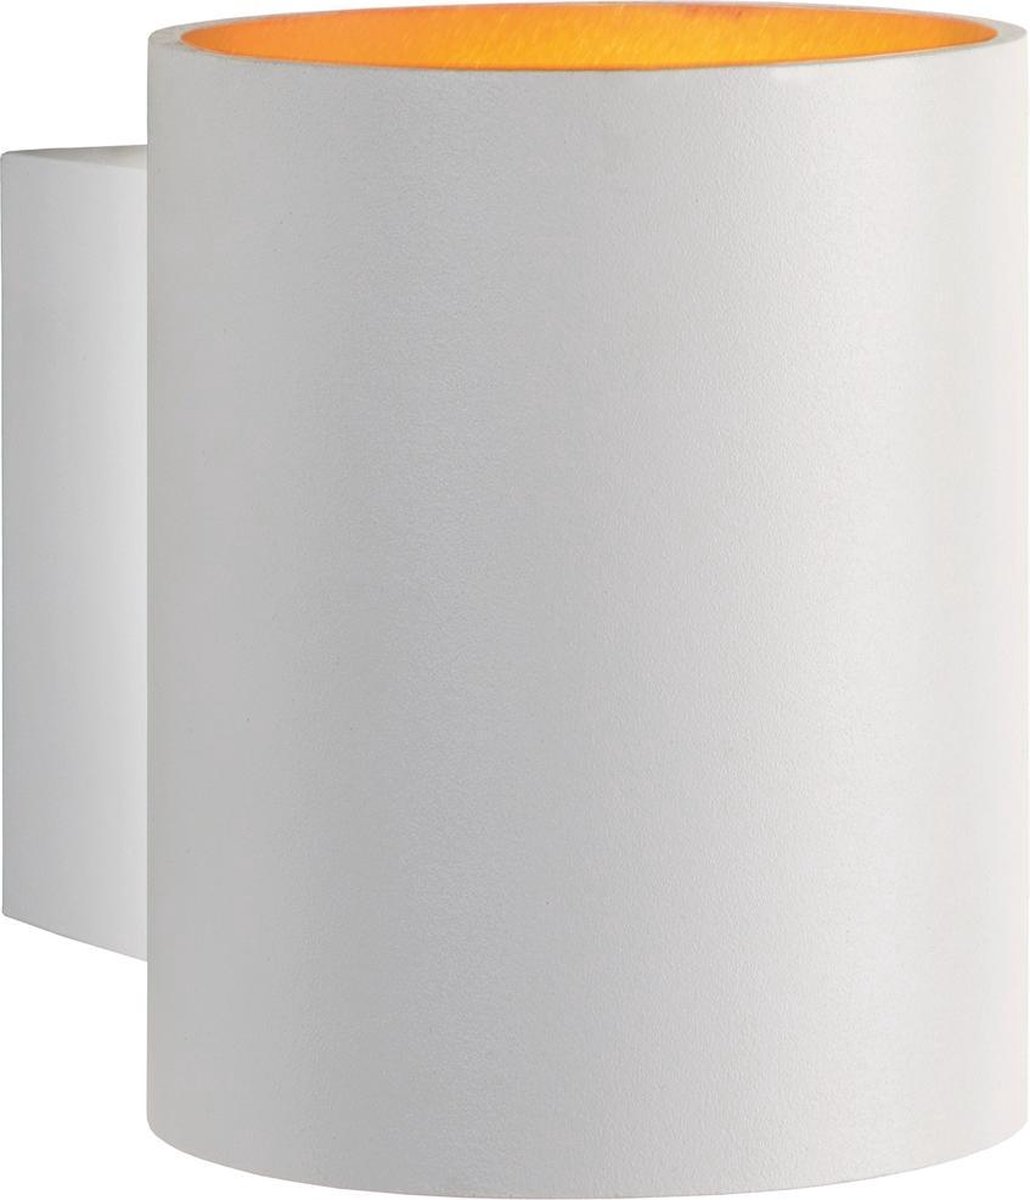 sticker kleding stof morfine Spectrum - LED wandlamp wit goud rond - G9 aansluiting - Excl. lichtbron |  bol.com